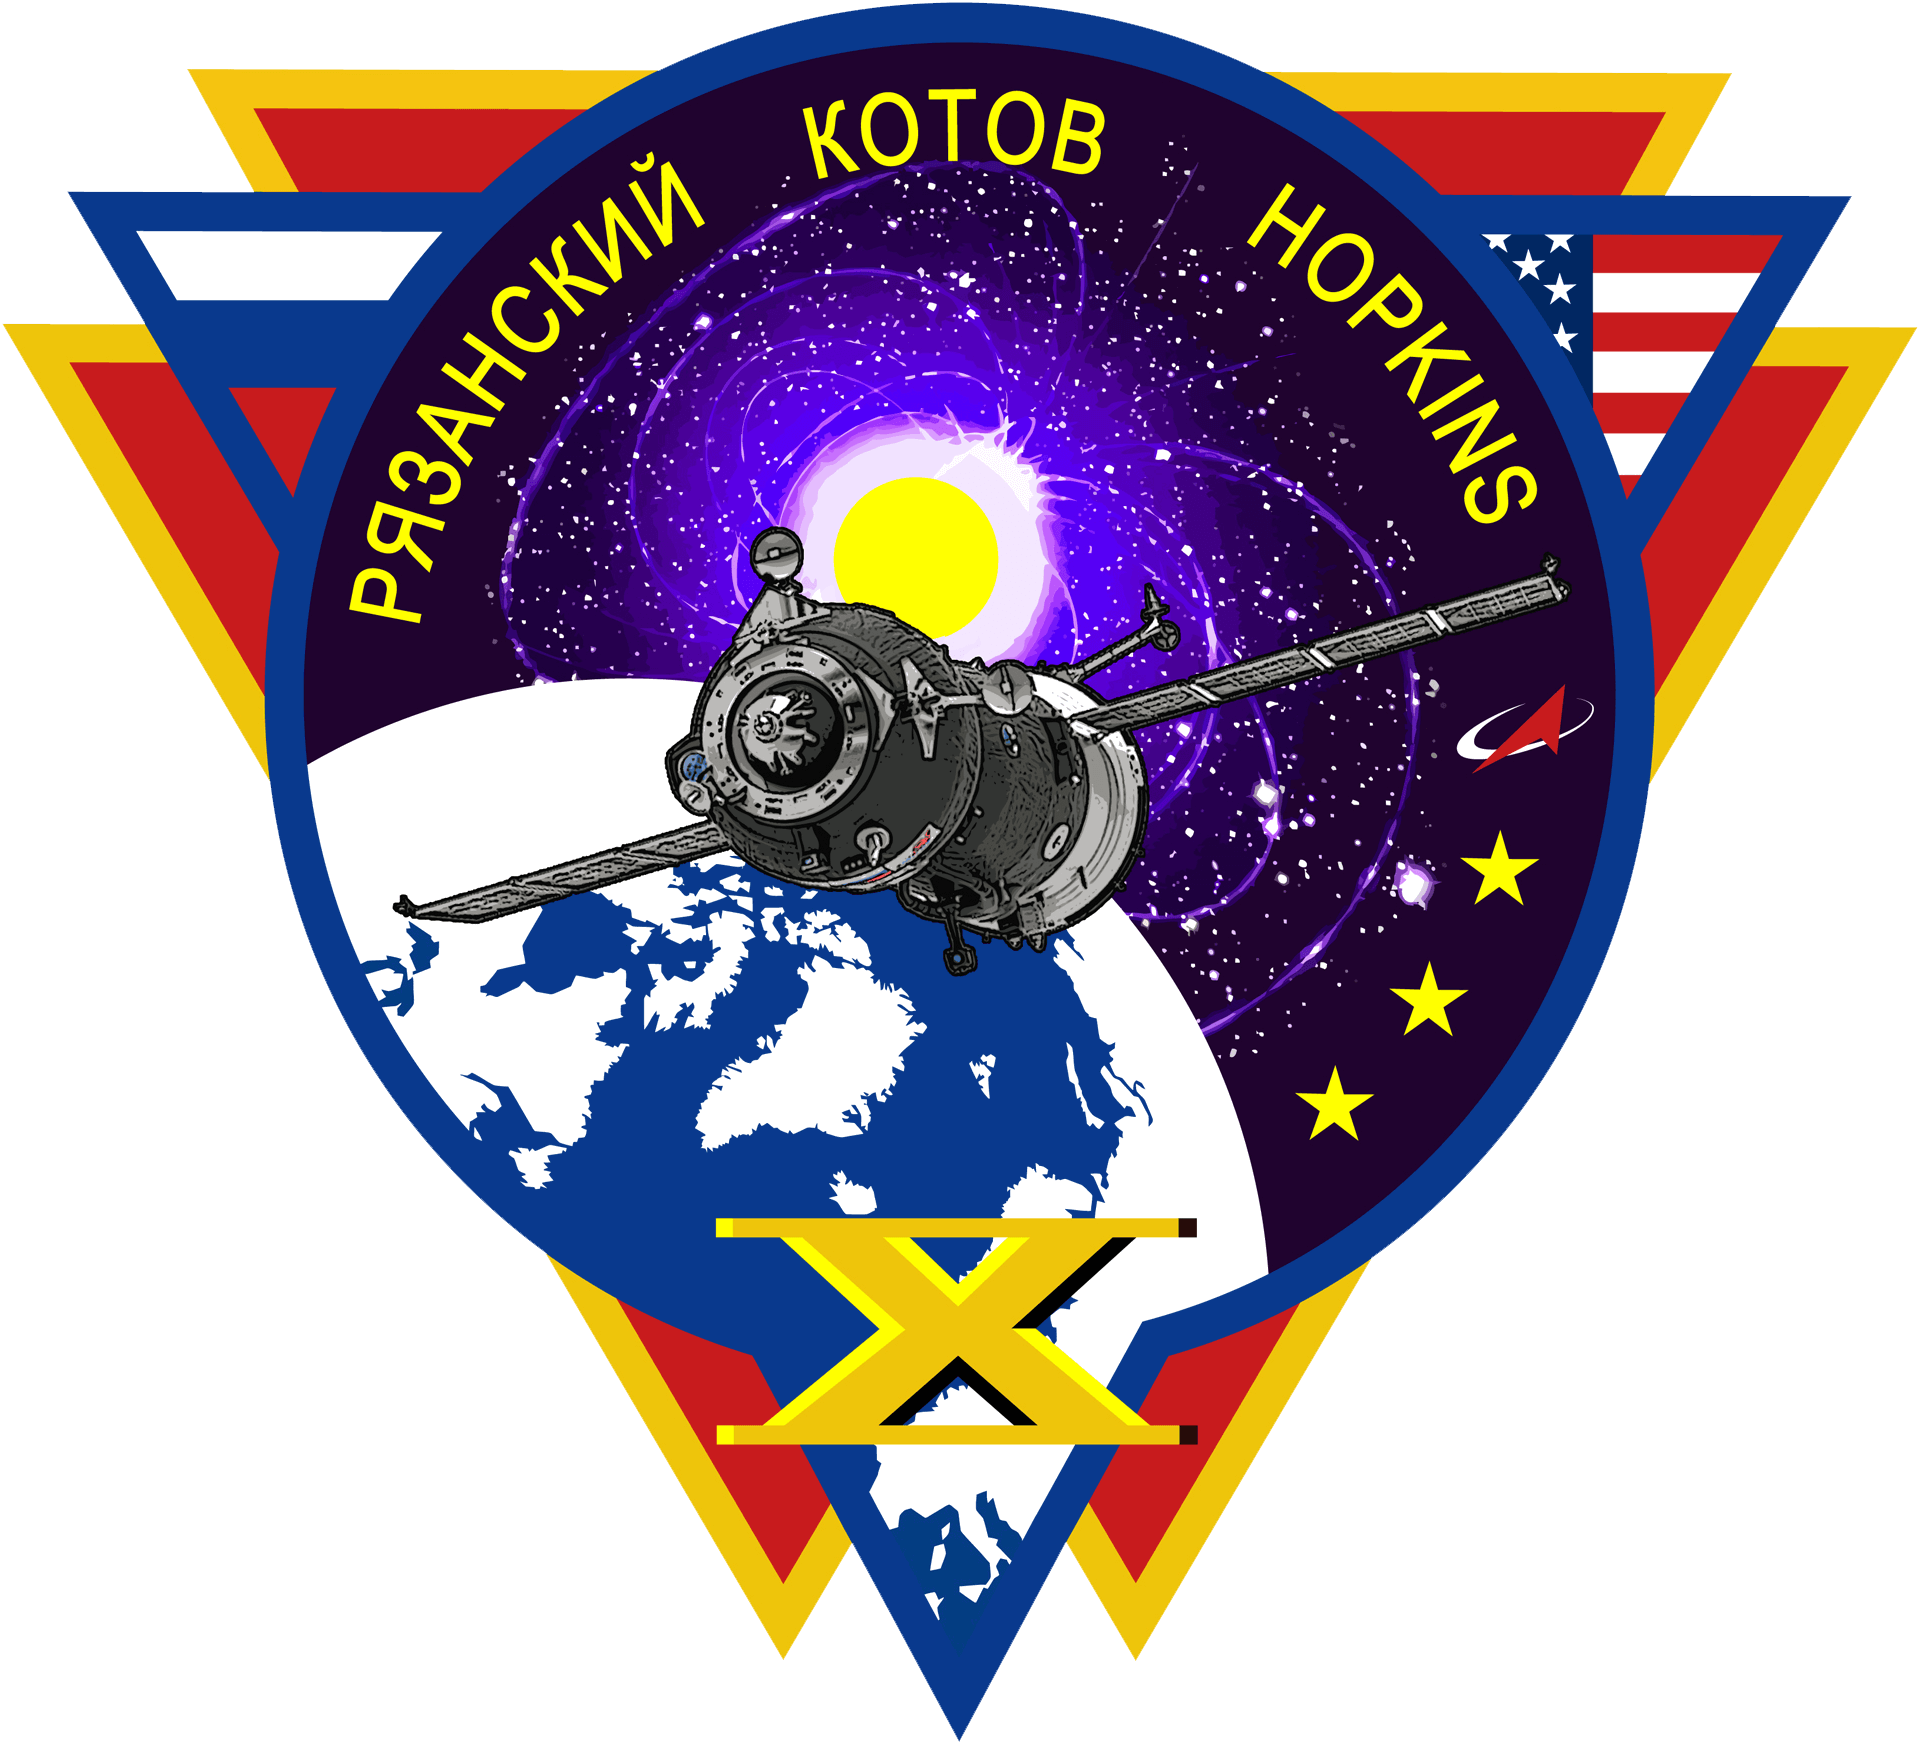 Mission patch for Soyuz TMA-10M